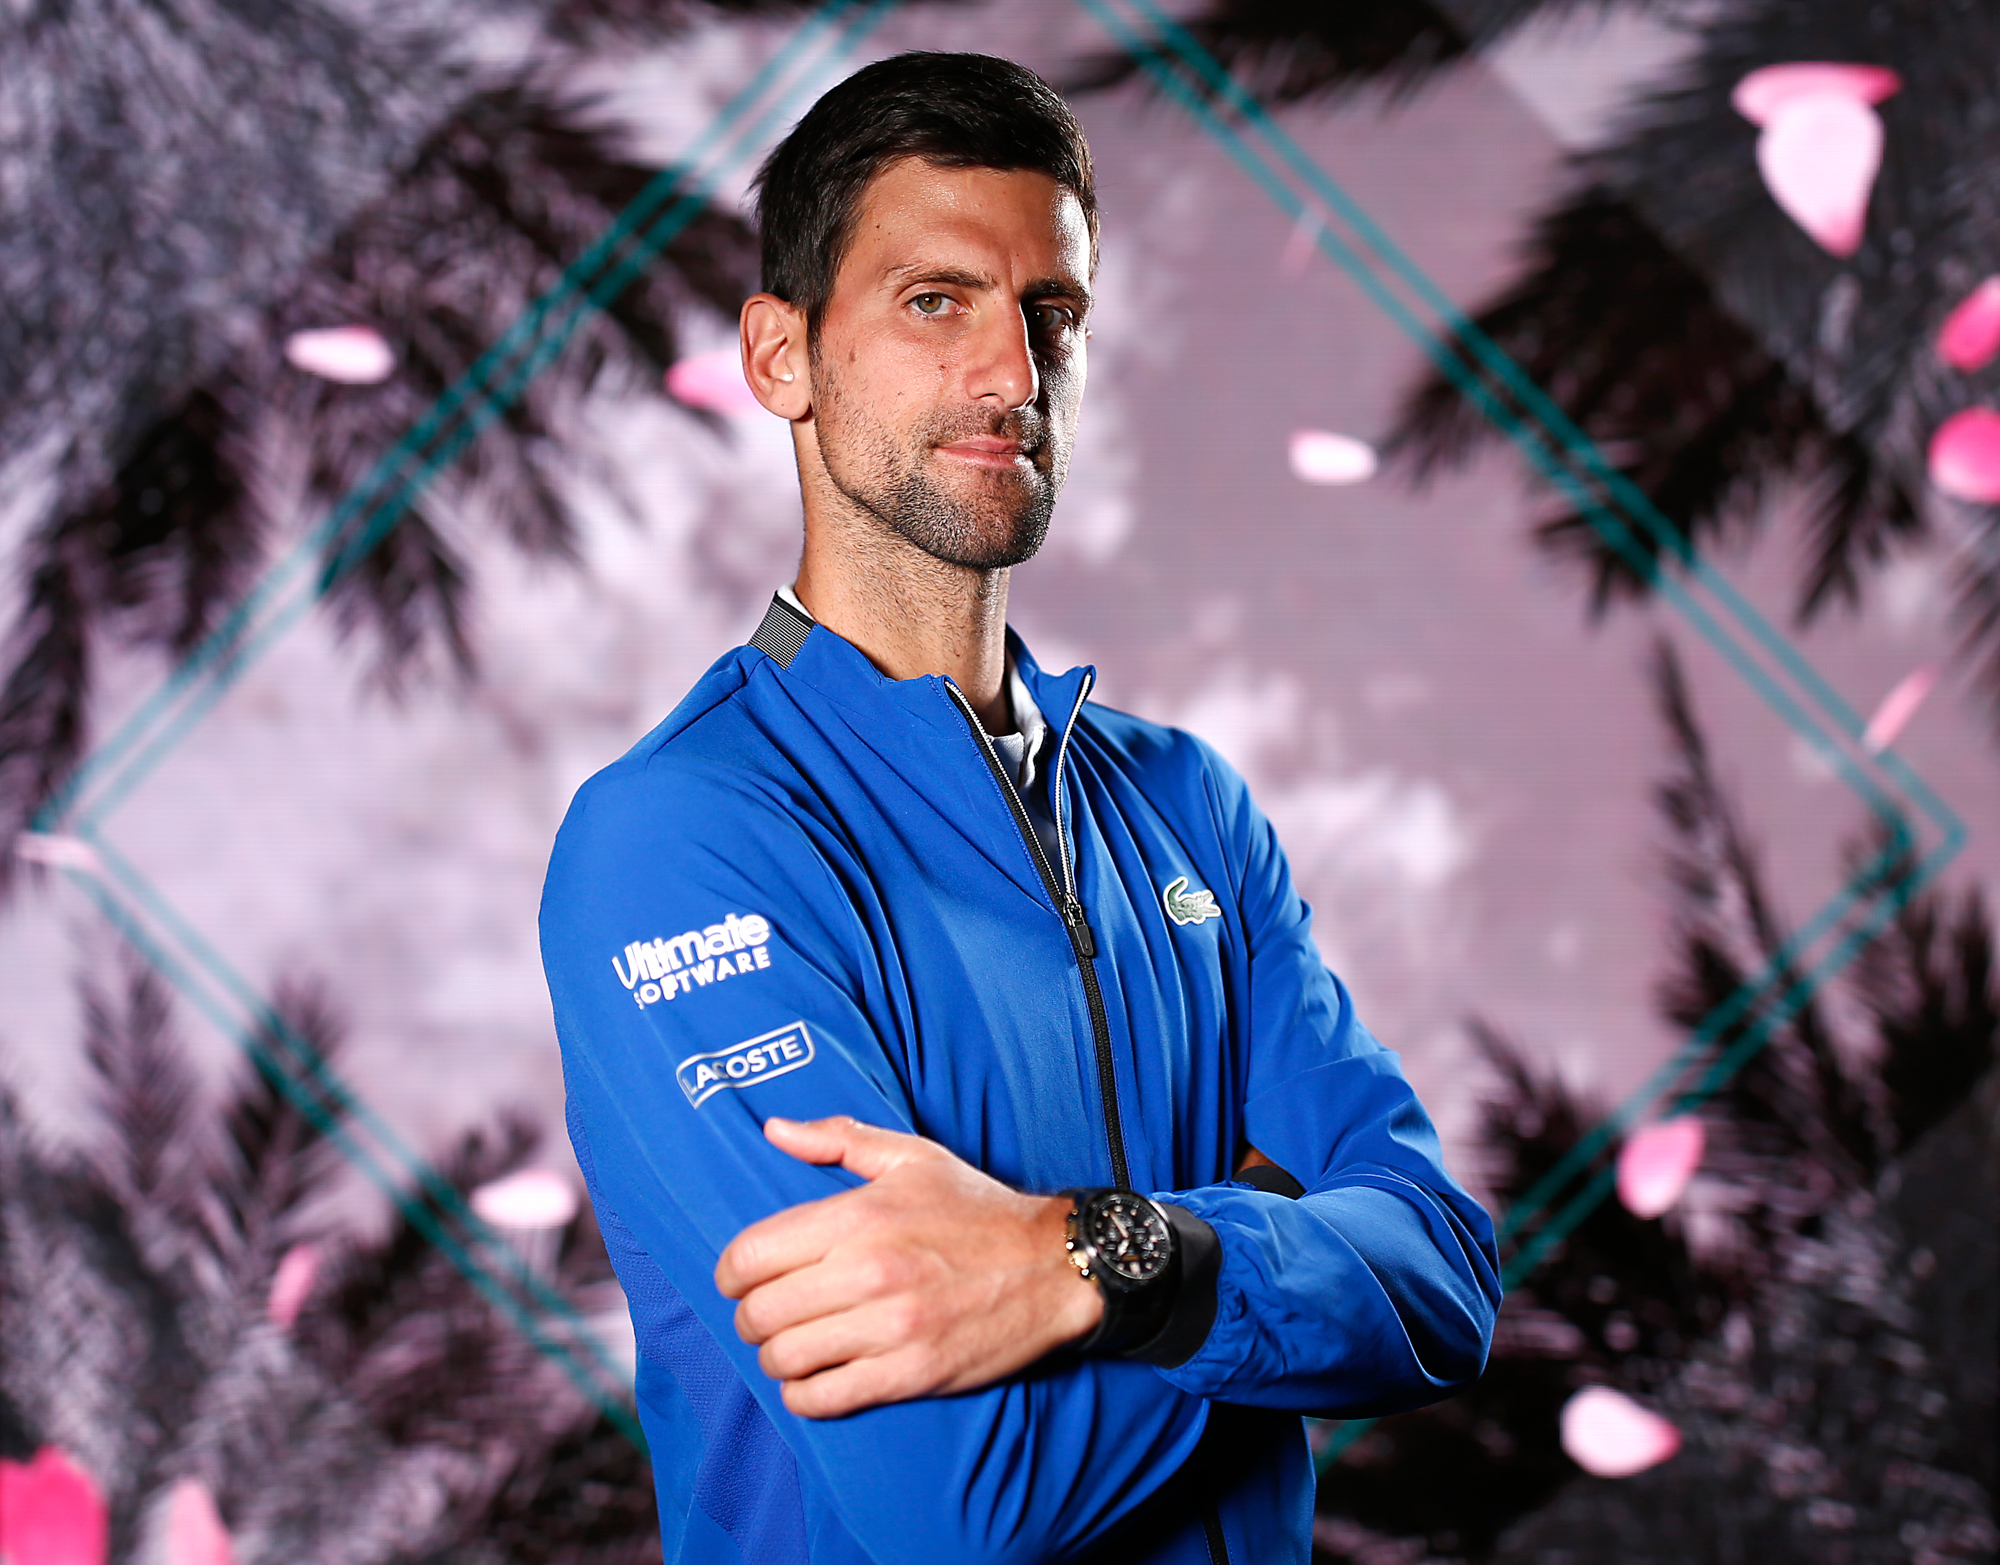 Descarga gratis la imagen Tenis, Serbio, Deporte, Novak Djokovic en el escritorio de tu PC